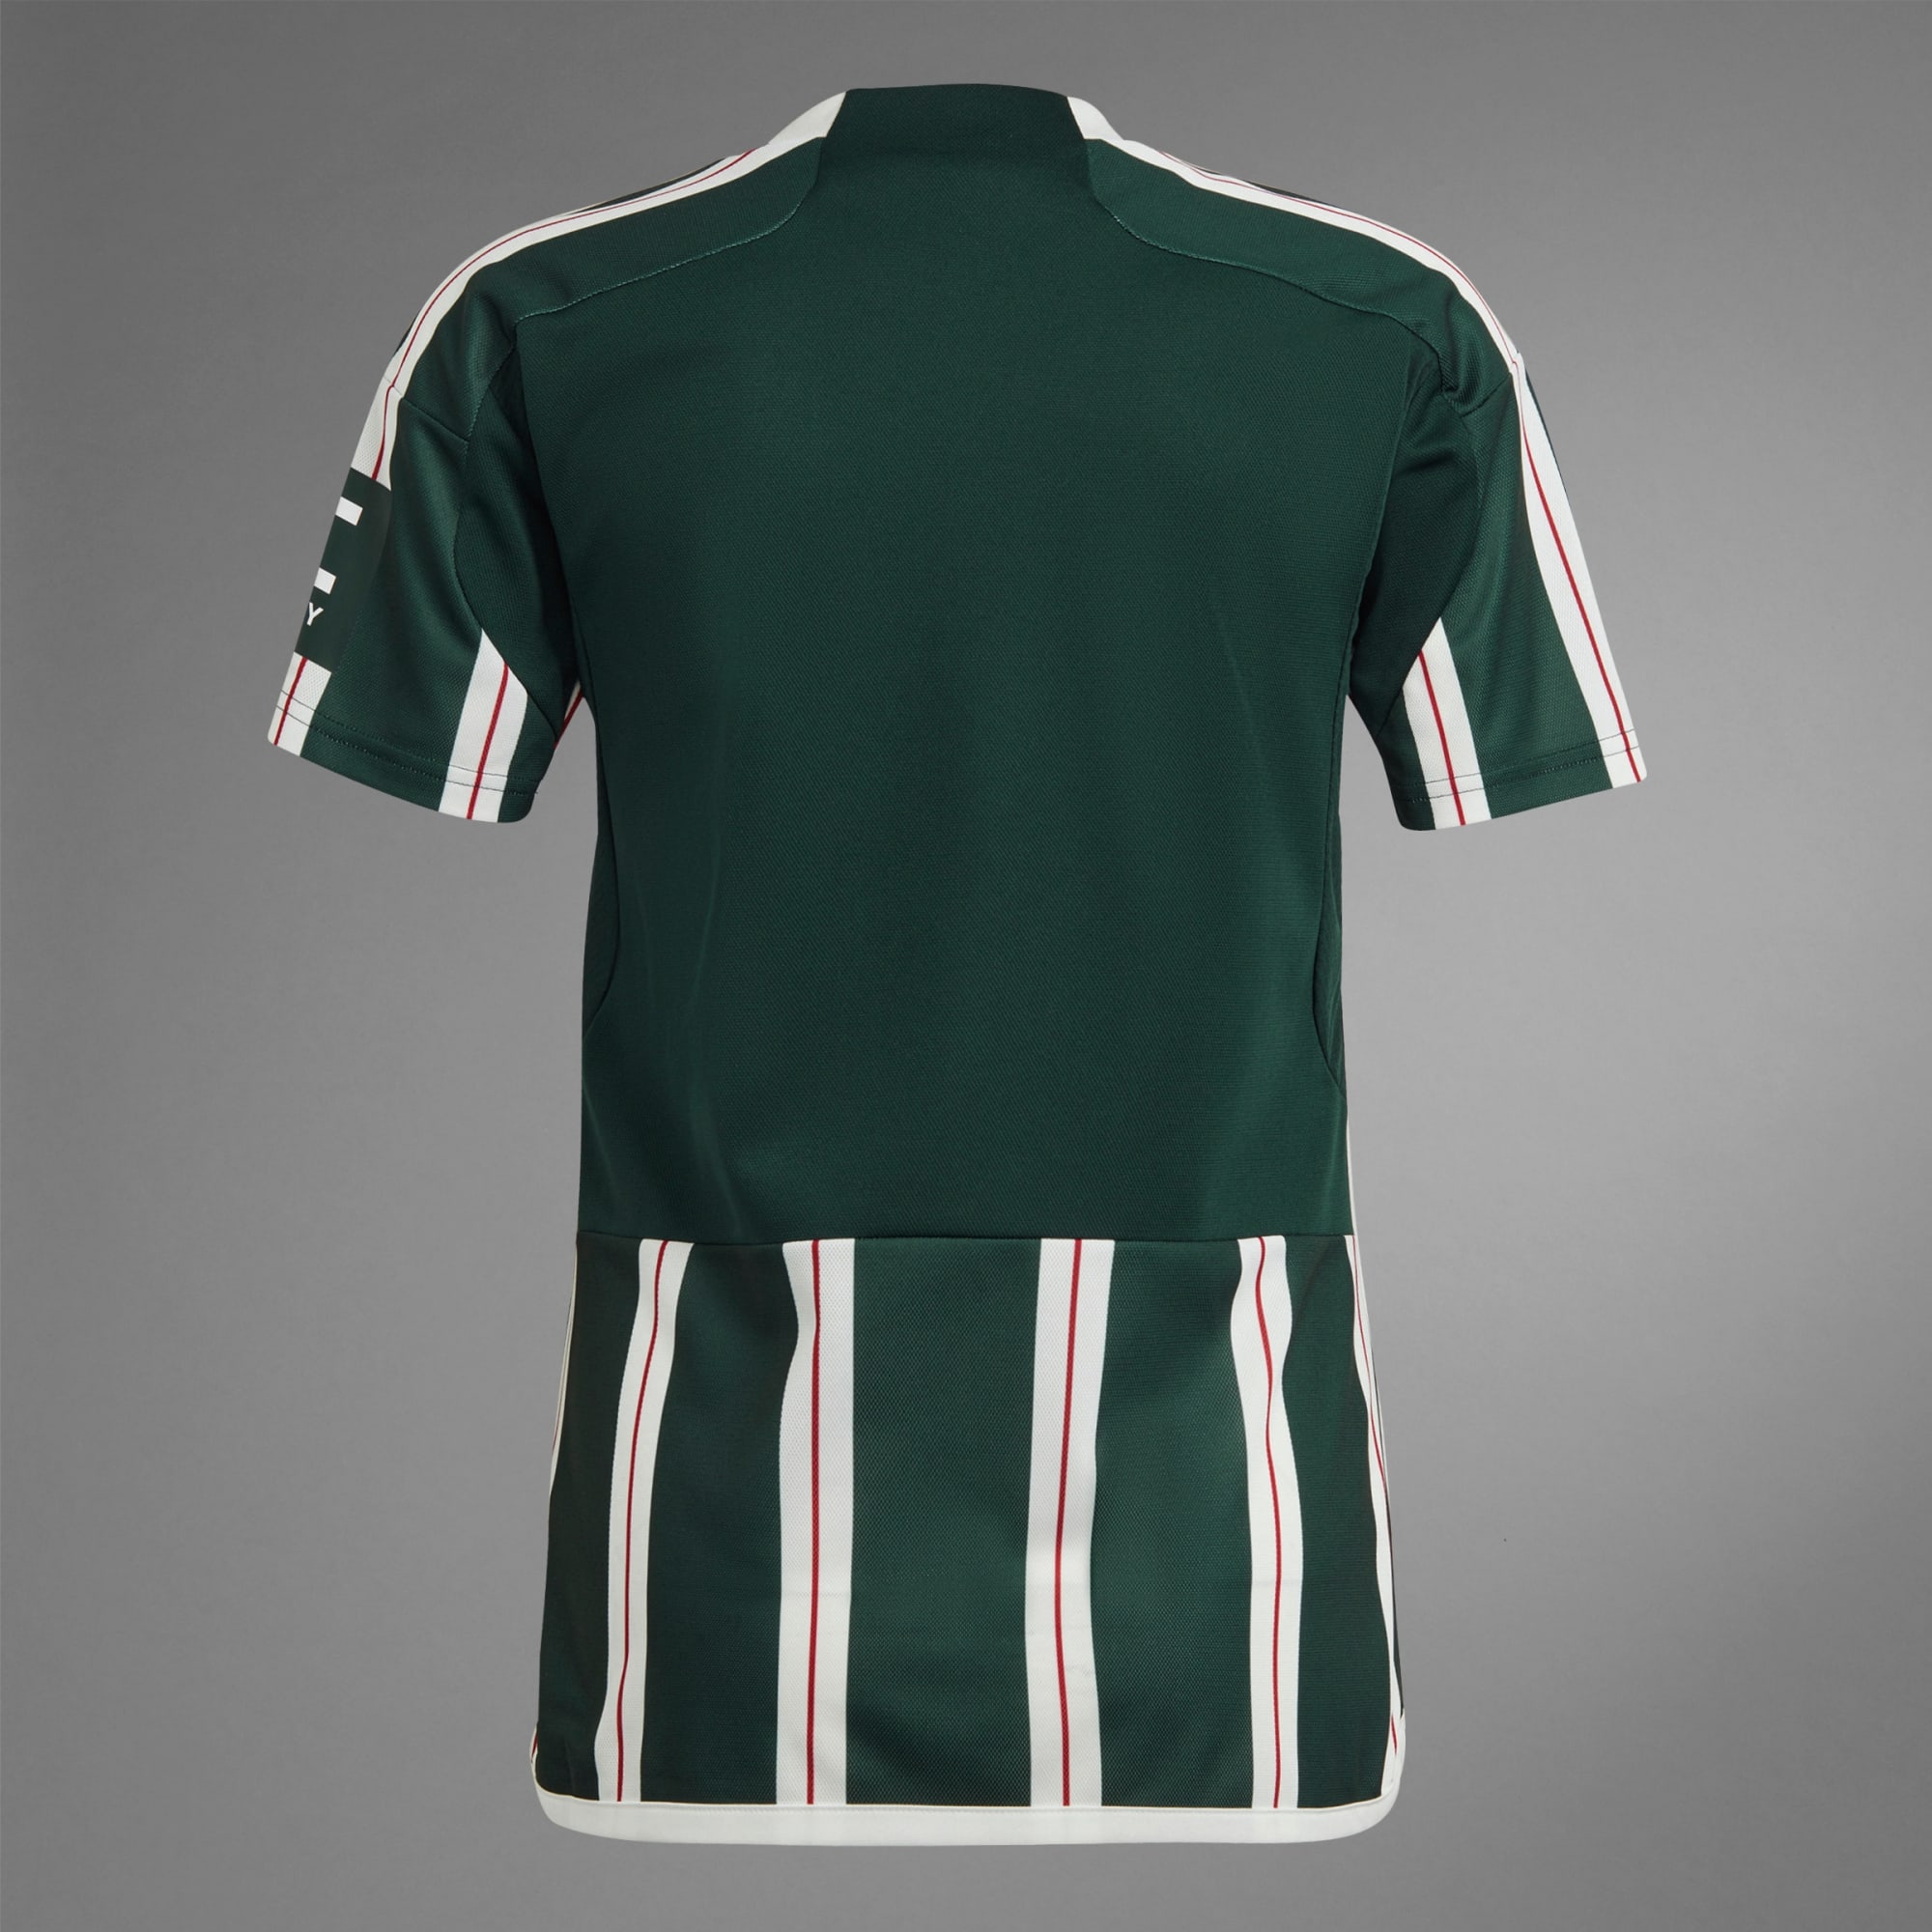 Men's Clothing - Orlando Pirates FC 23/24 Away Jersey - Green